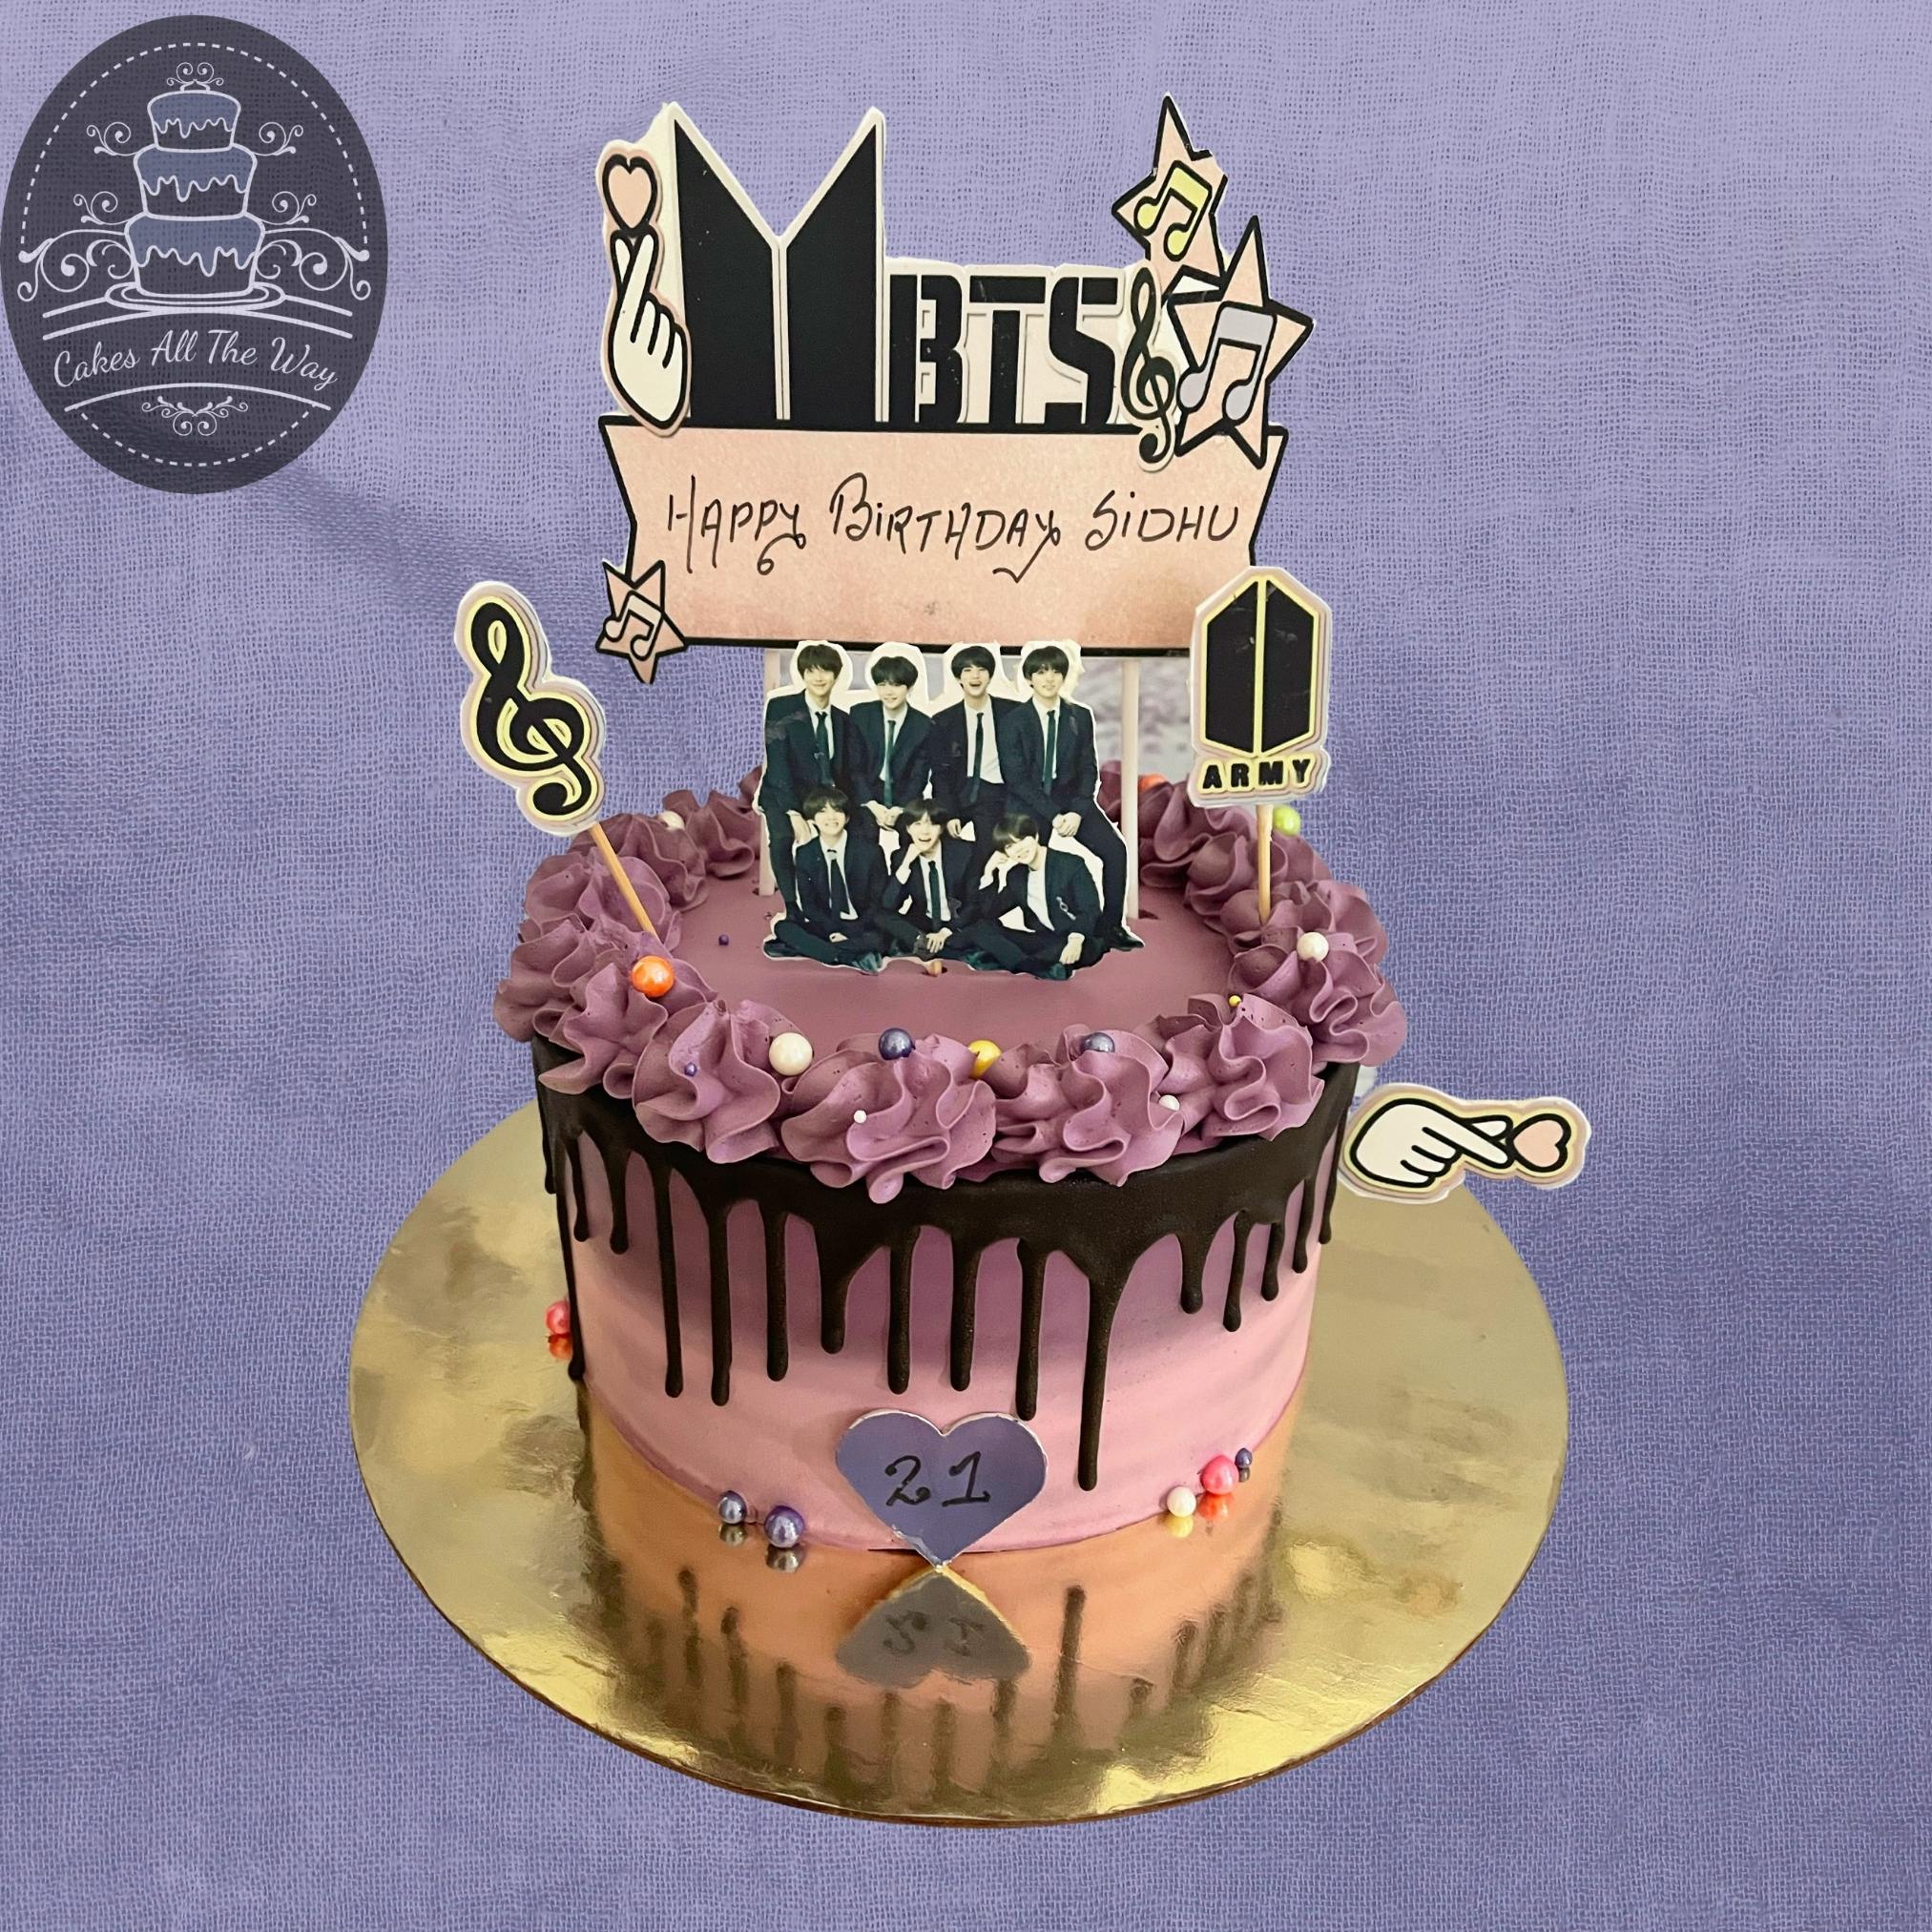 BTS Theme Cake|Best Customized Cakes in Hyderabad|CakeSmash.in